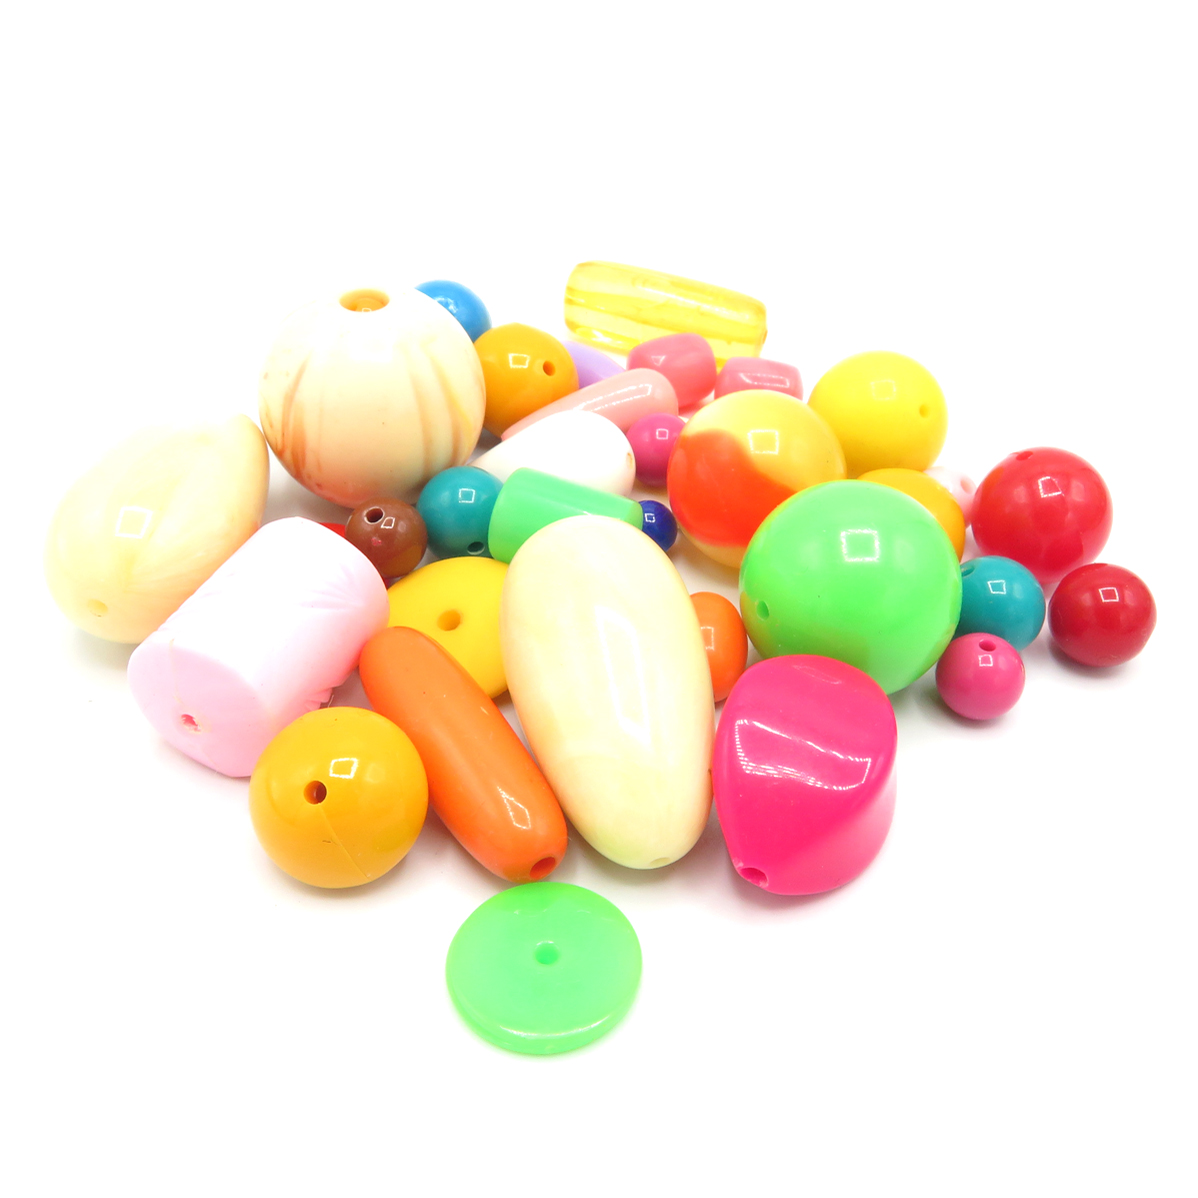 bead mix, designer beads, acrylic beads, colorful beads, fun beads,  designer quality beads, plastic, plastic beads